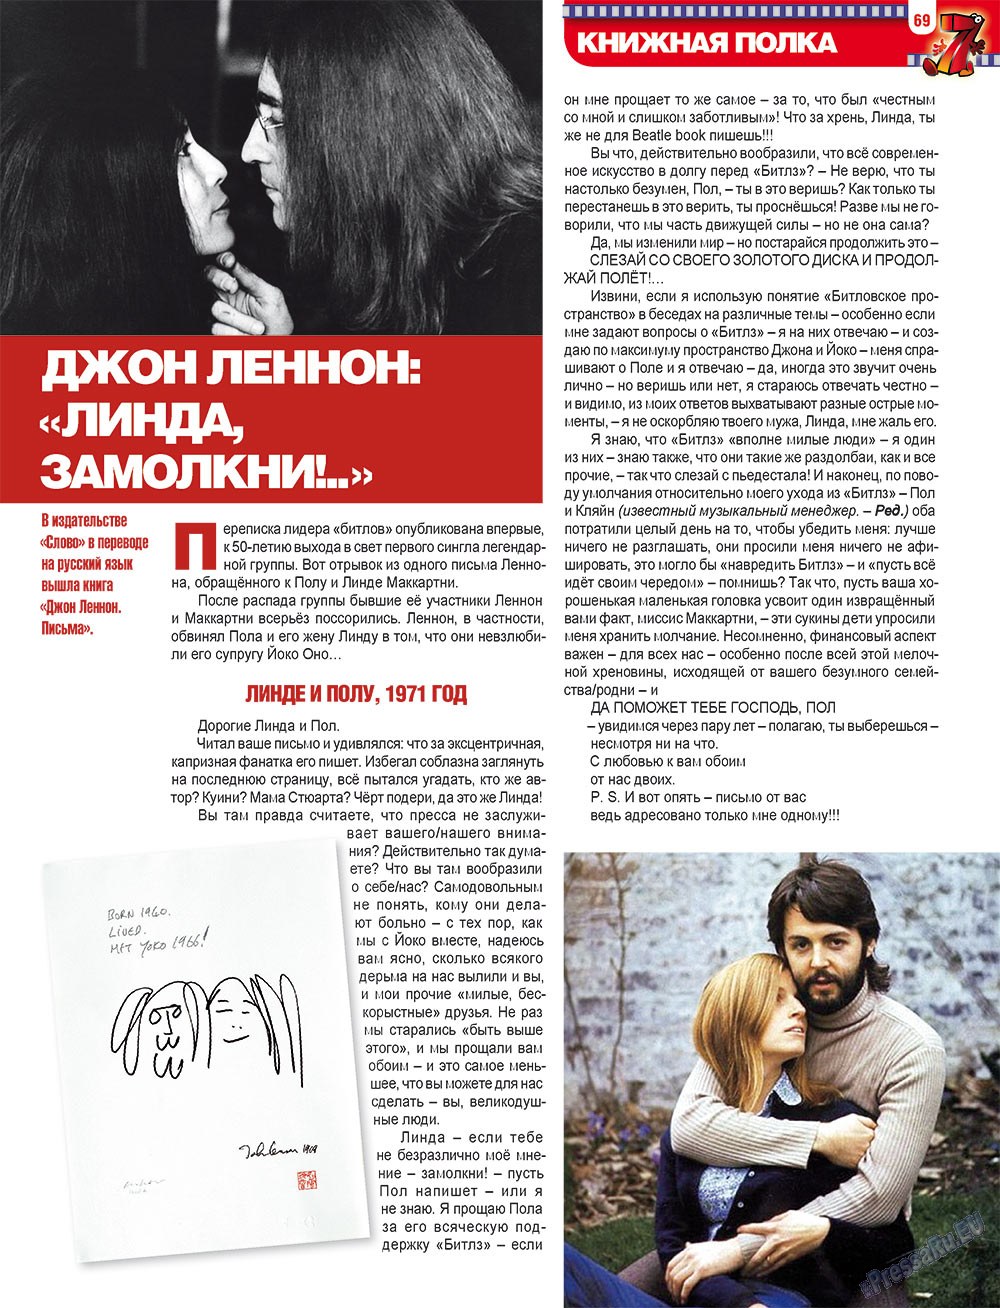 7плюс7я (журнал). 2012 год, номер 42, стр. 69